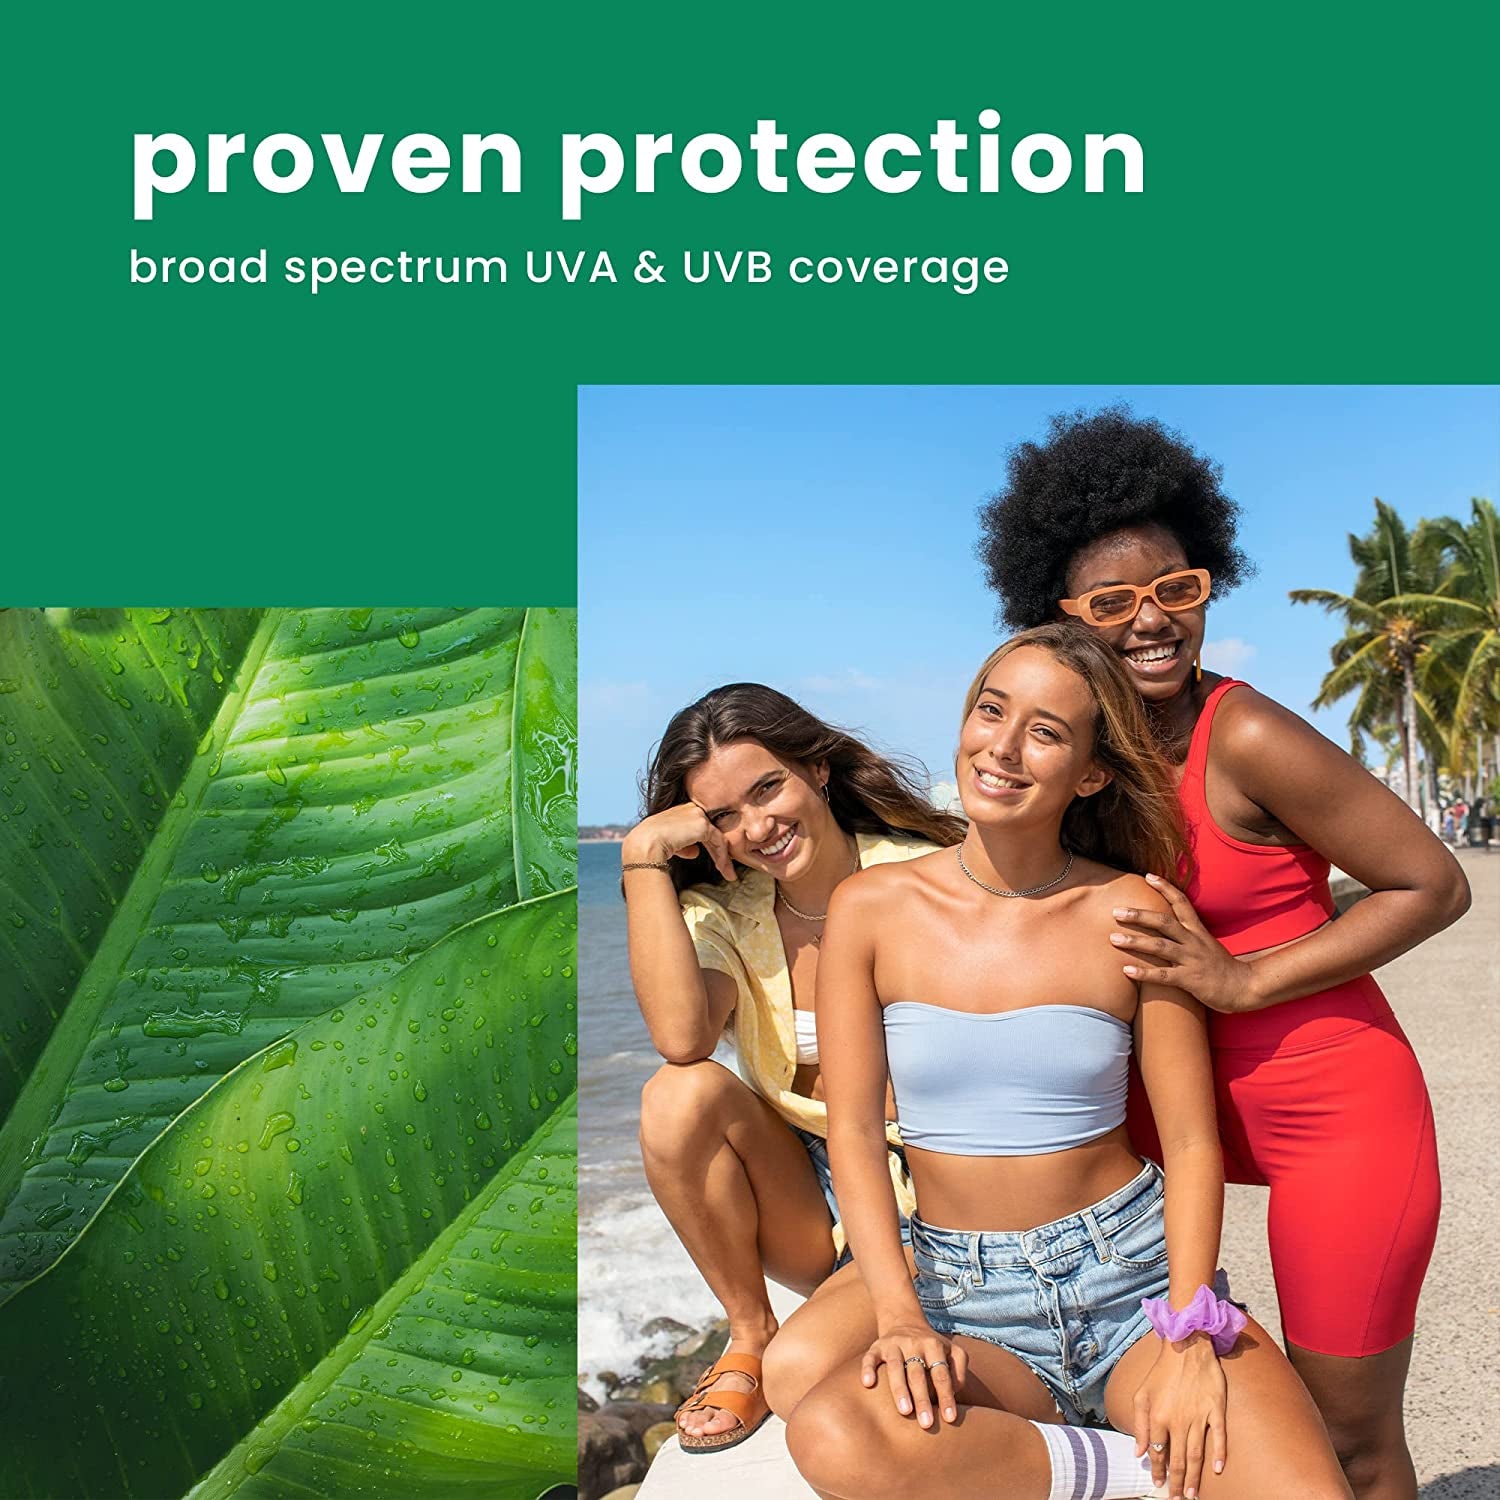 "Hawaiian Tropic SPF 30 Mineral Powder Sunscreen Brush - Sun Protection On-The-Go!"